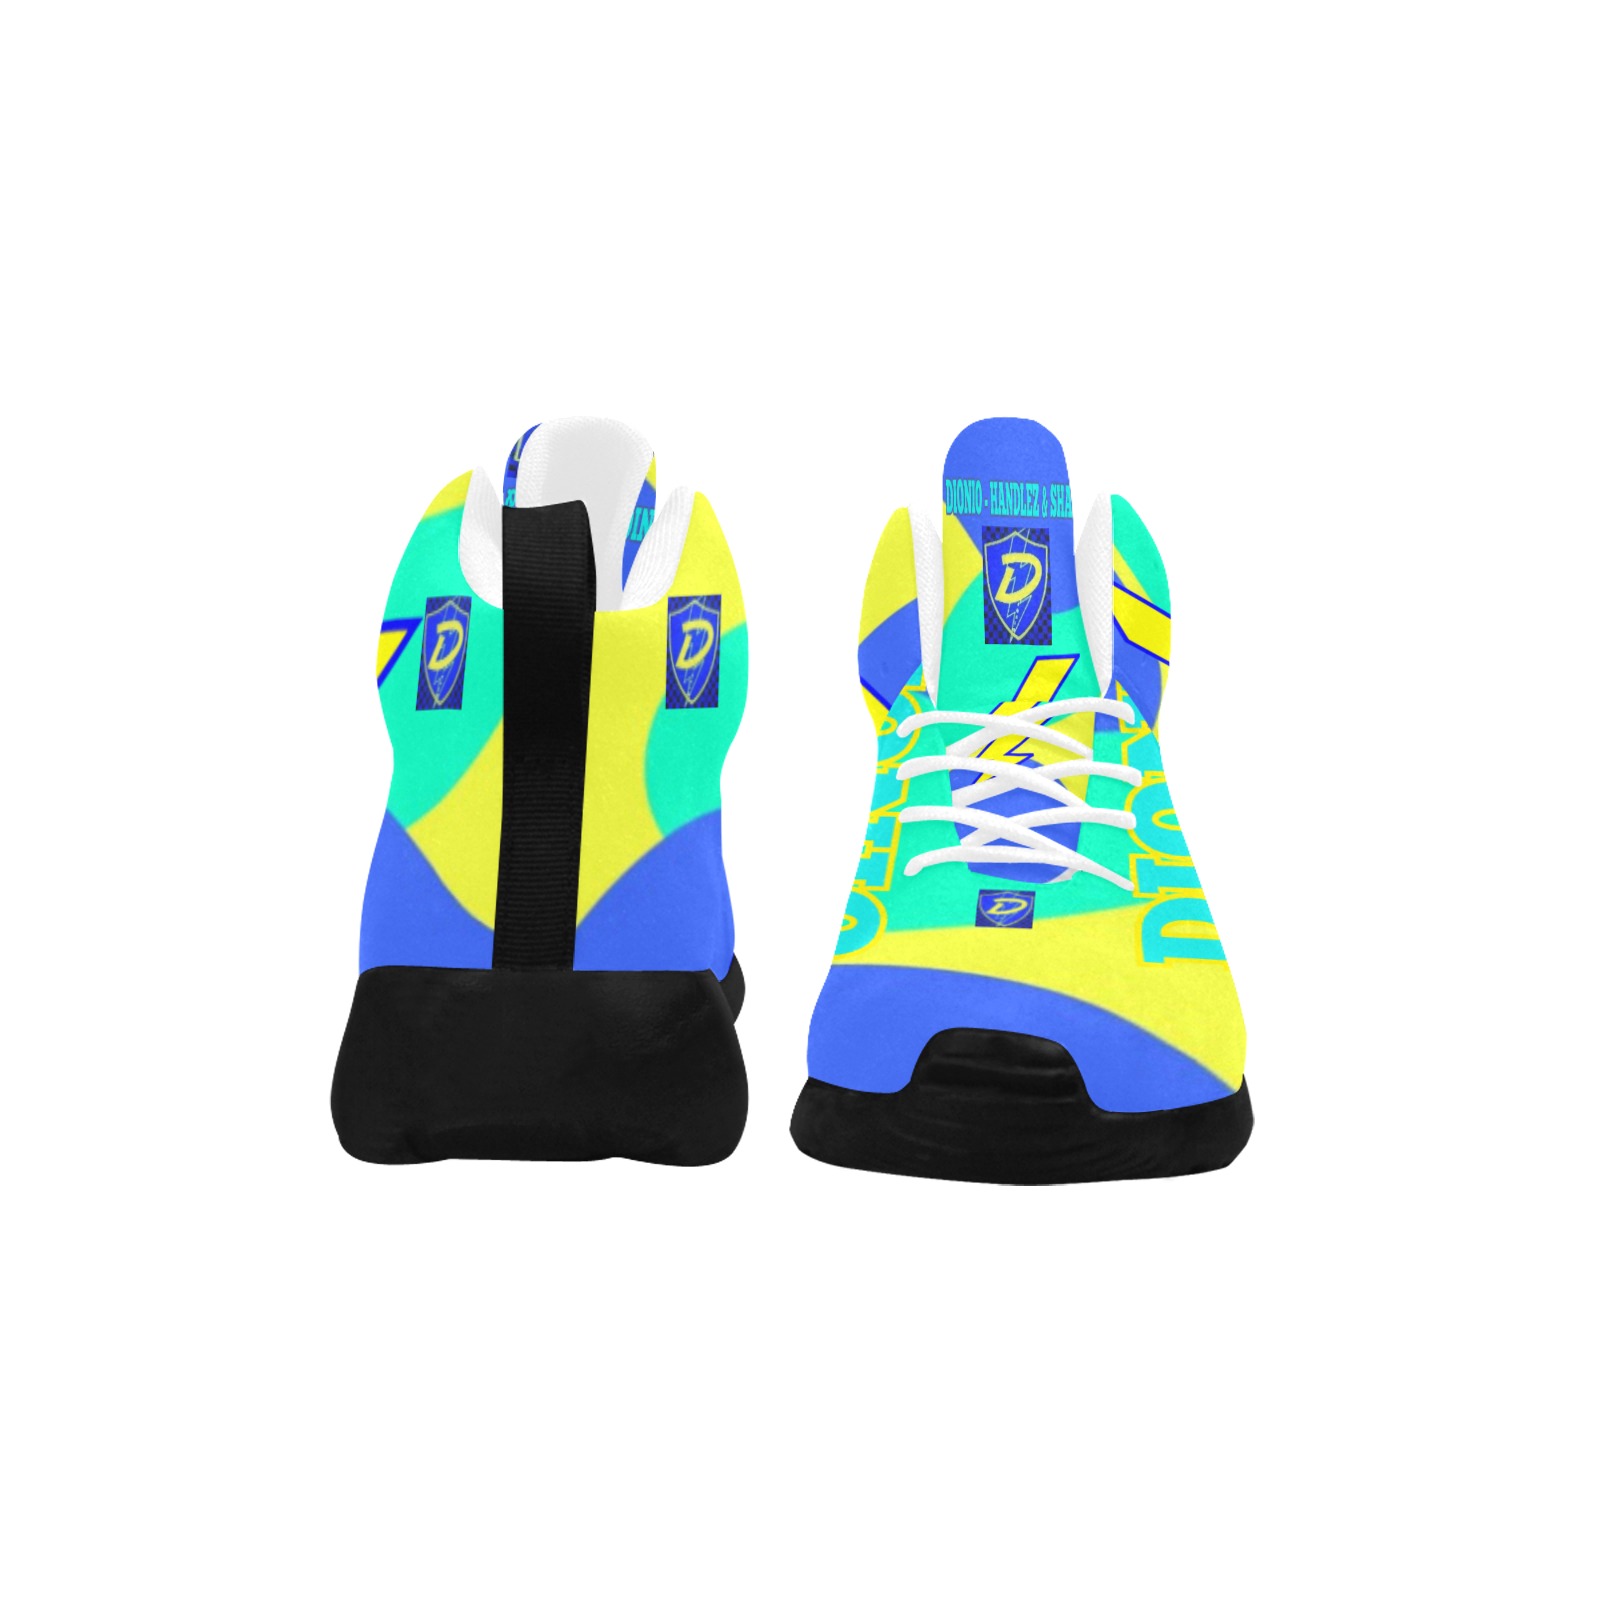 DIONIO - Handlez & Shake Luxury Basketball Sneaker Men's Chukka Training Shoes (Model 57502)